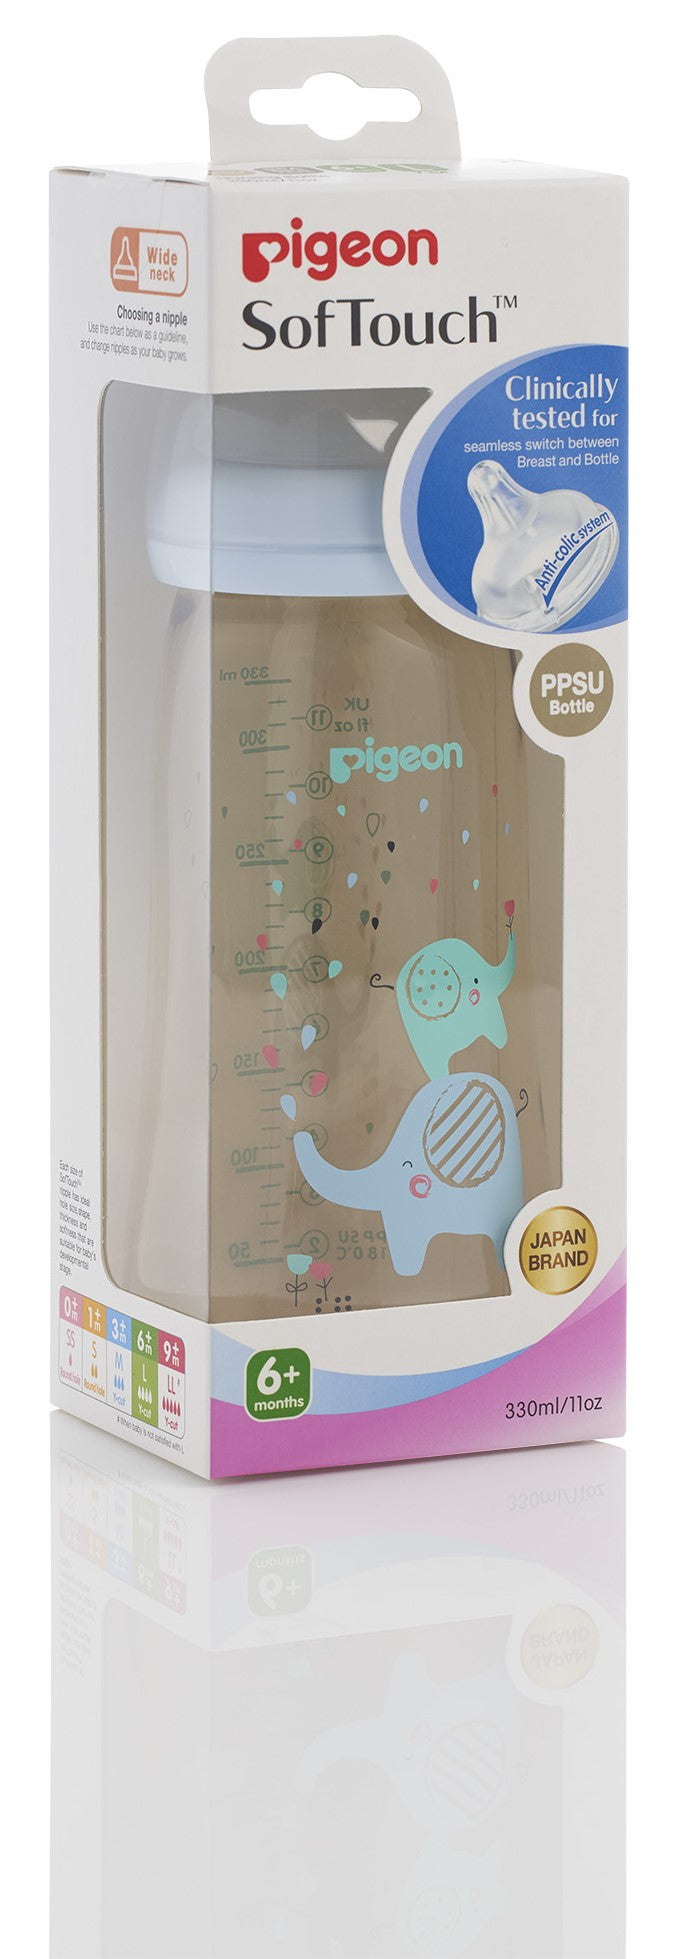 Pigeon SofTouch PPSU Nursing Bottle 330ml (L) - Elephant